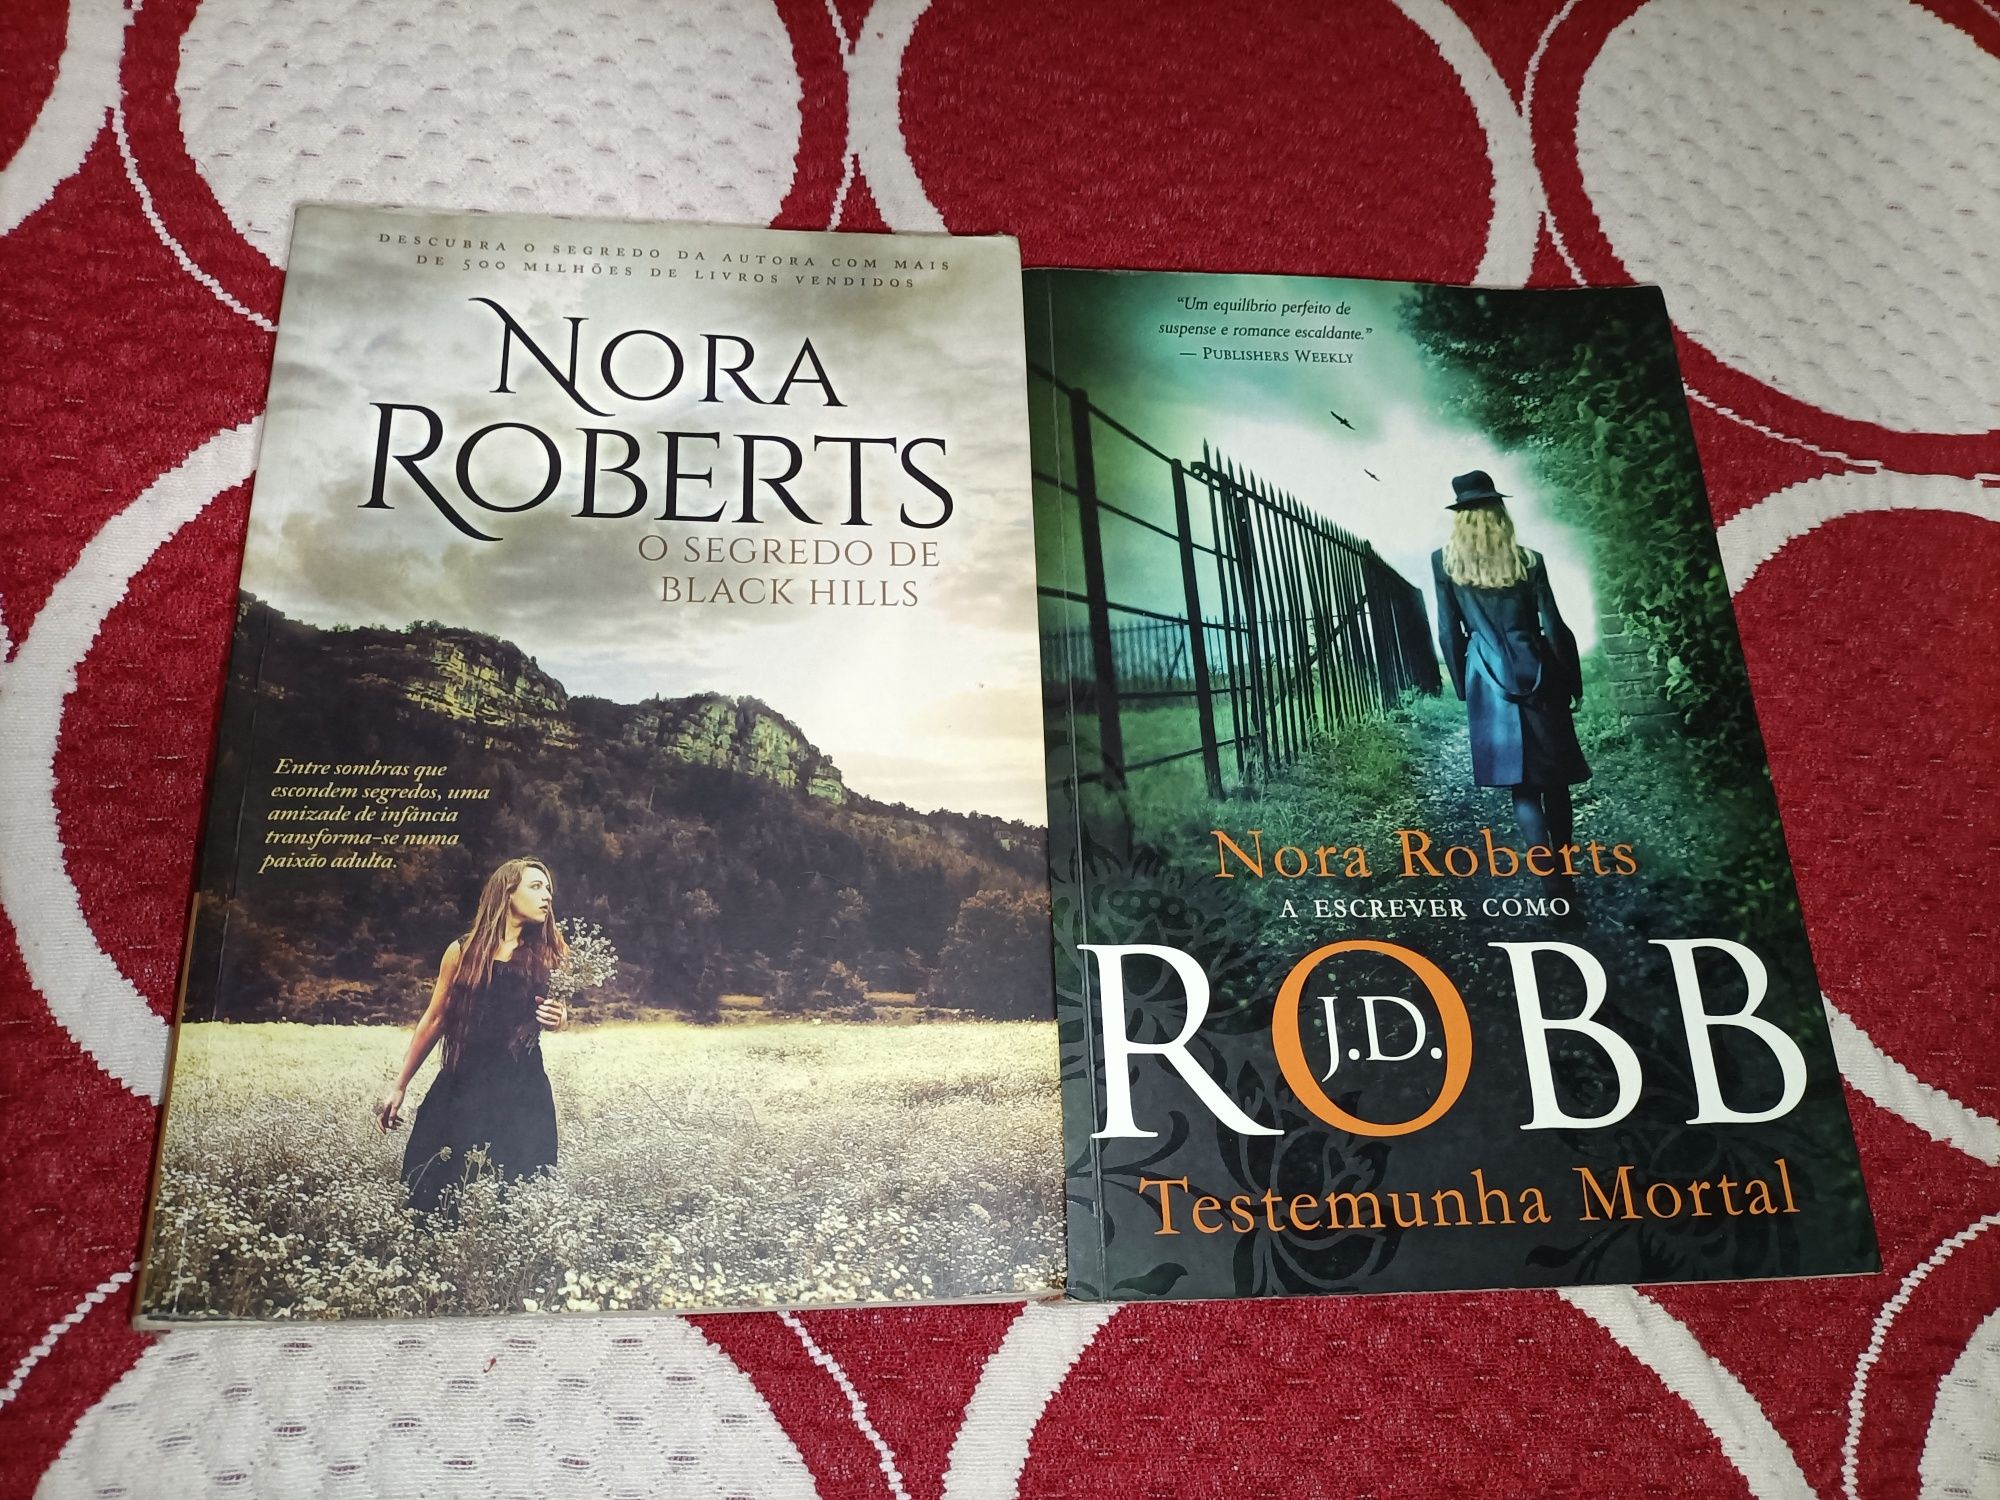 Nora Roberts+J.D Robb_2 Livros